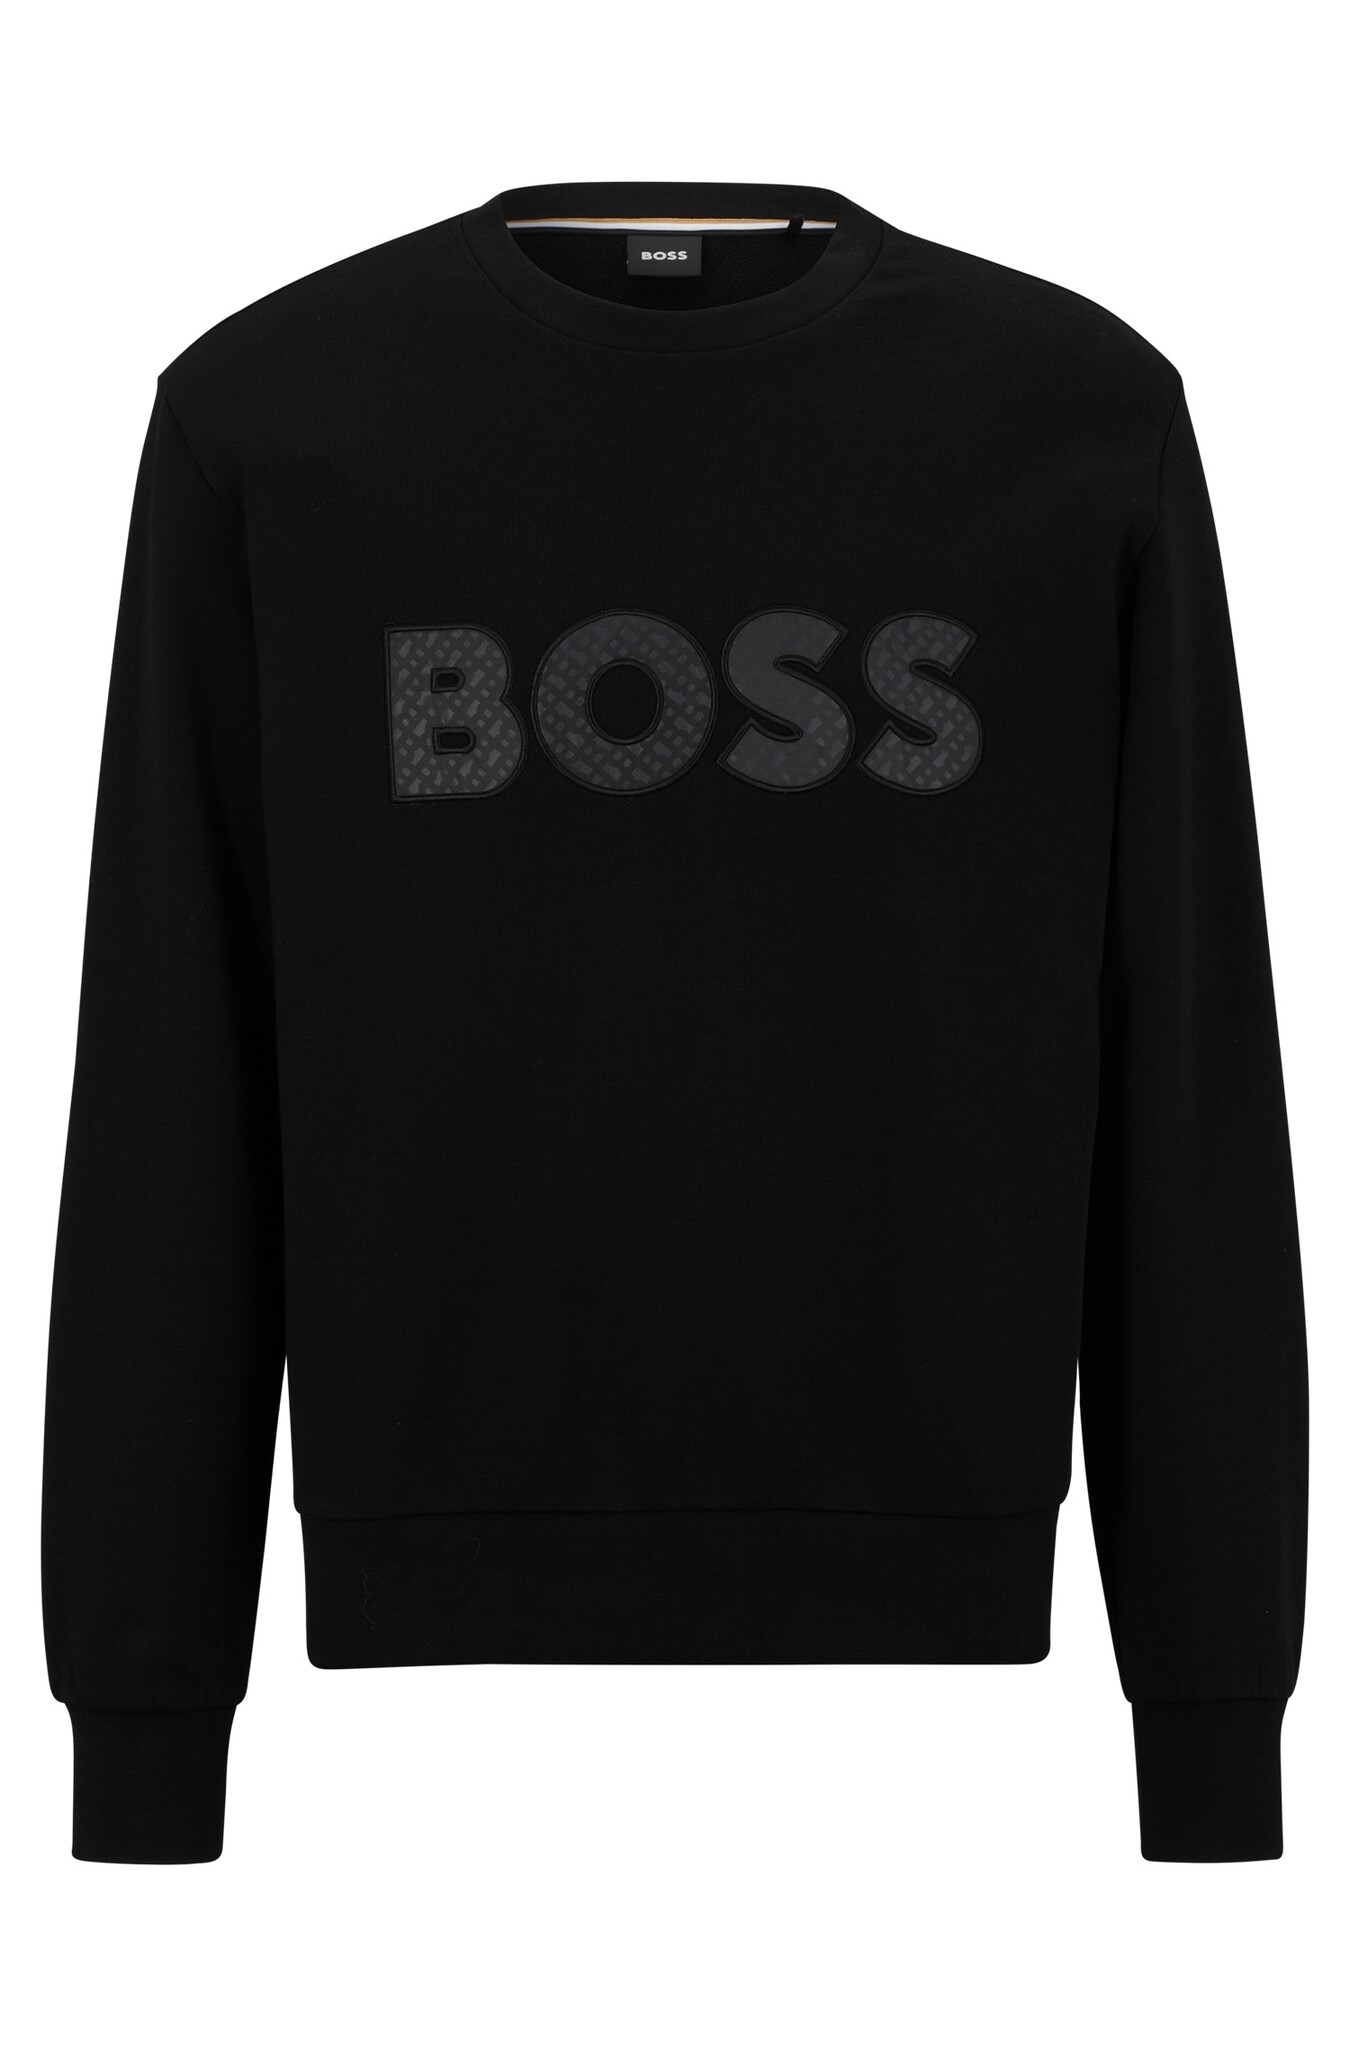 Hugo Boss Knitwear Hugo Boss 50494091-001